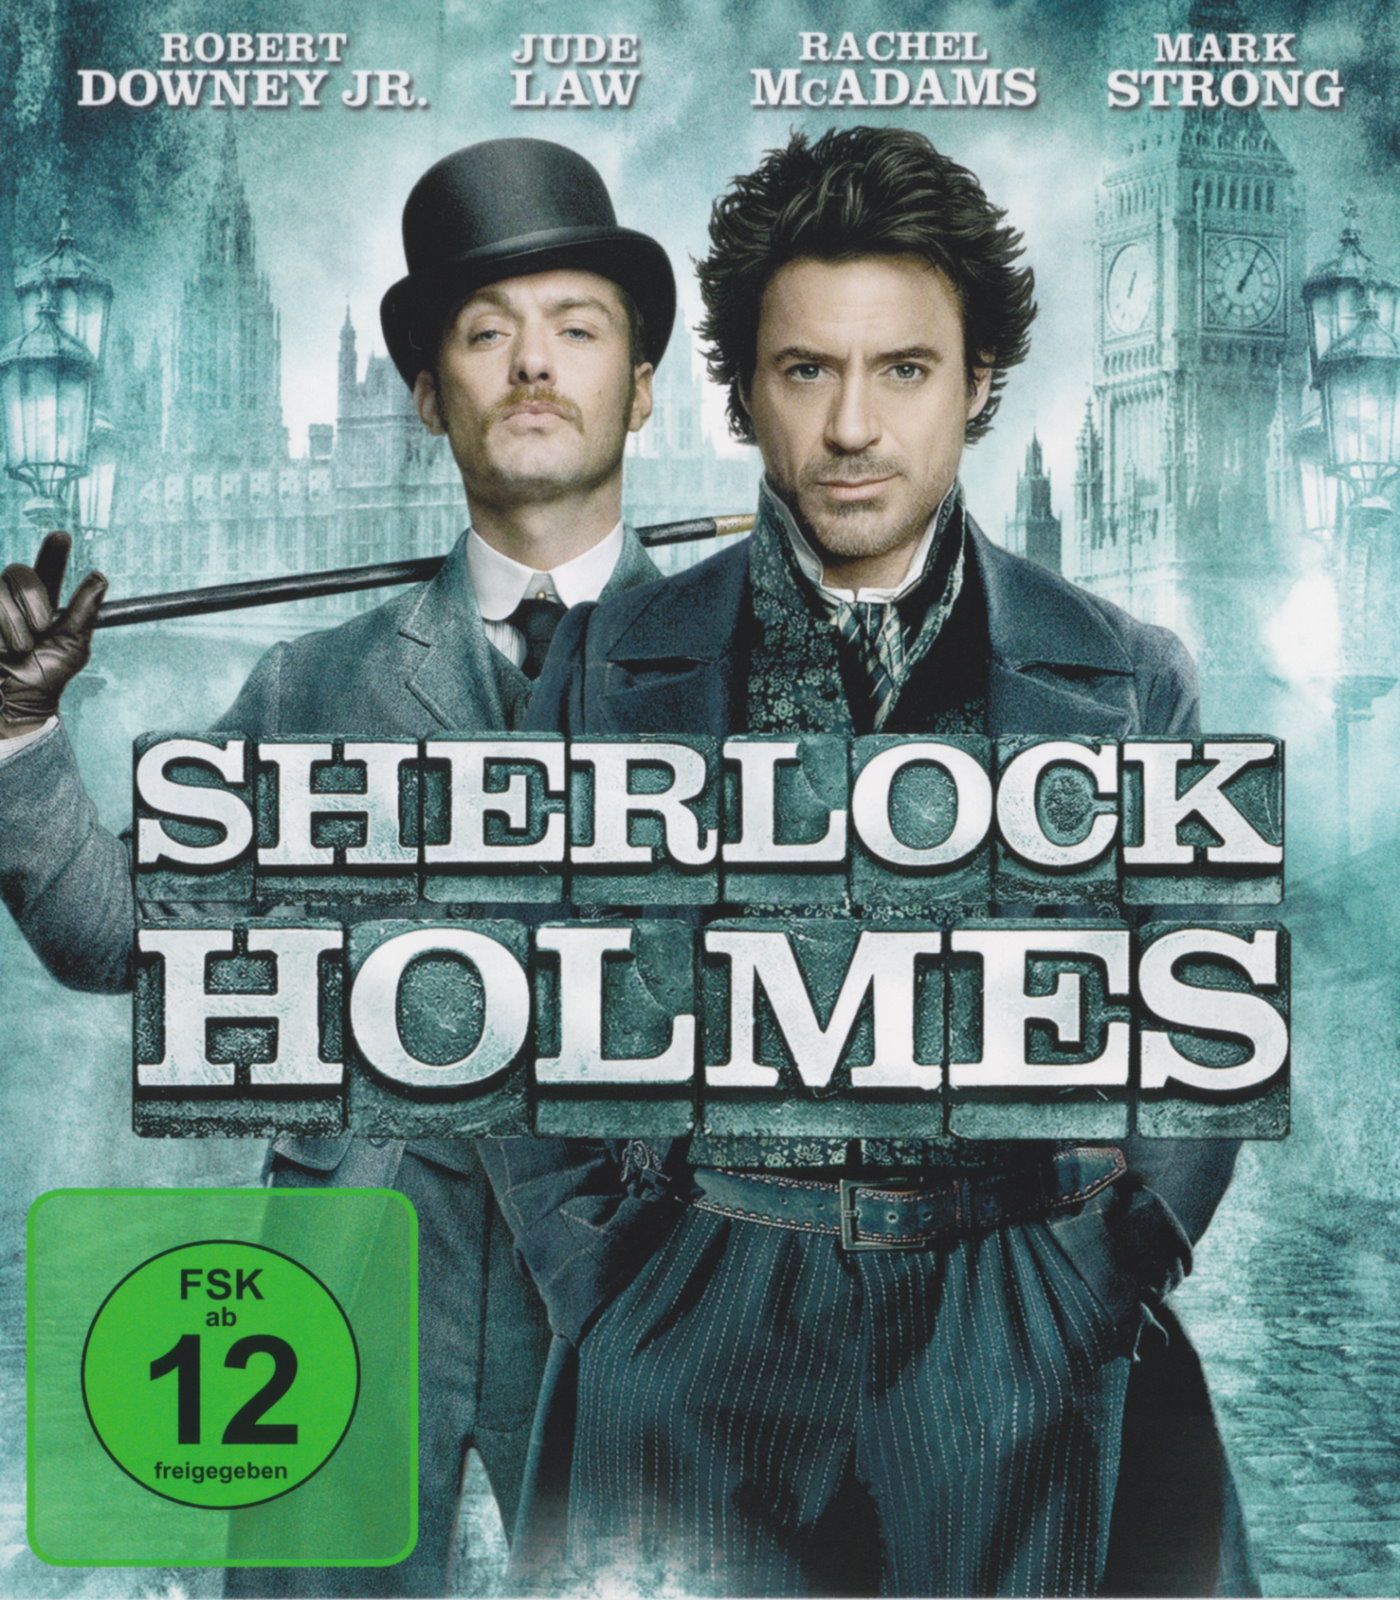 Cover - Sherlock Holmes.jpg